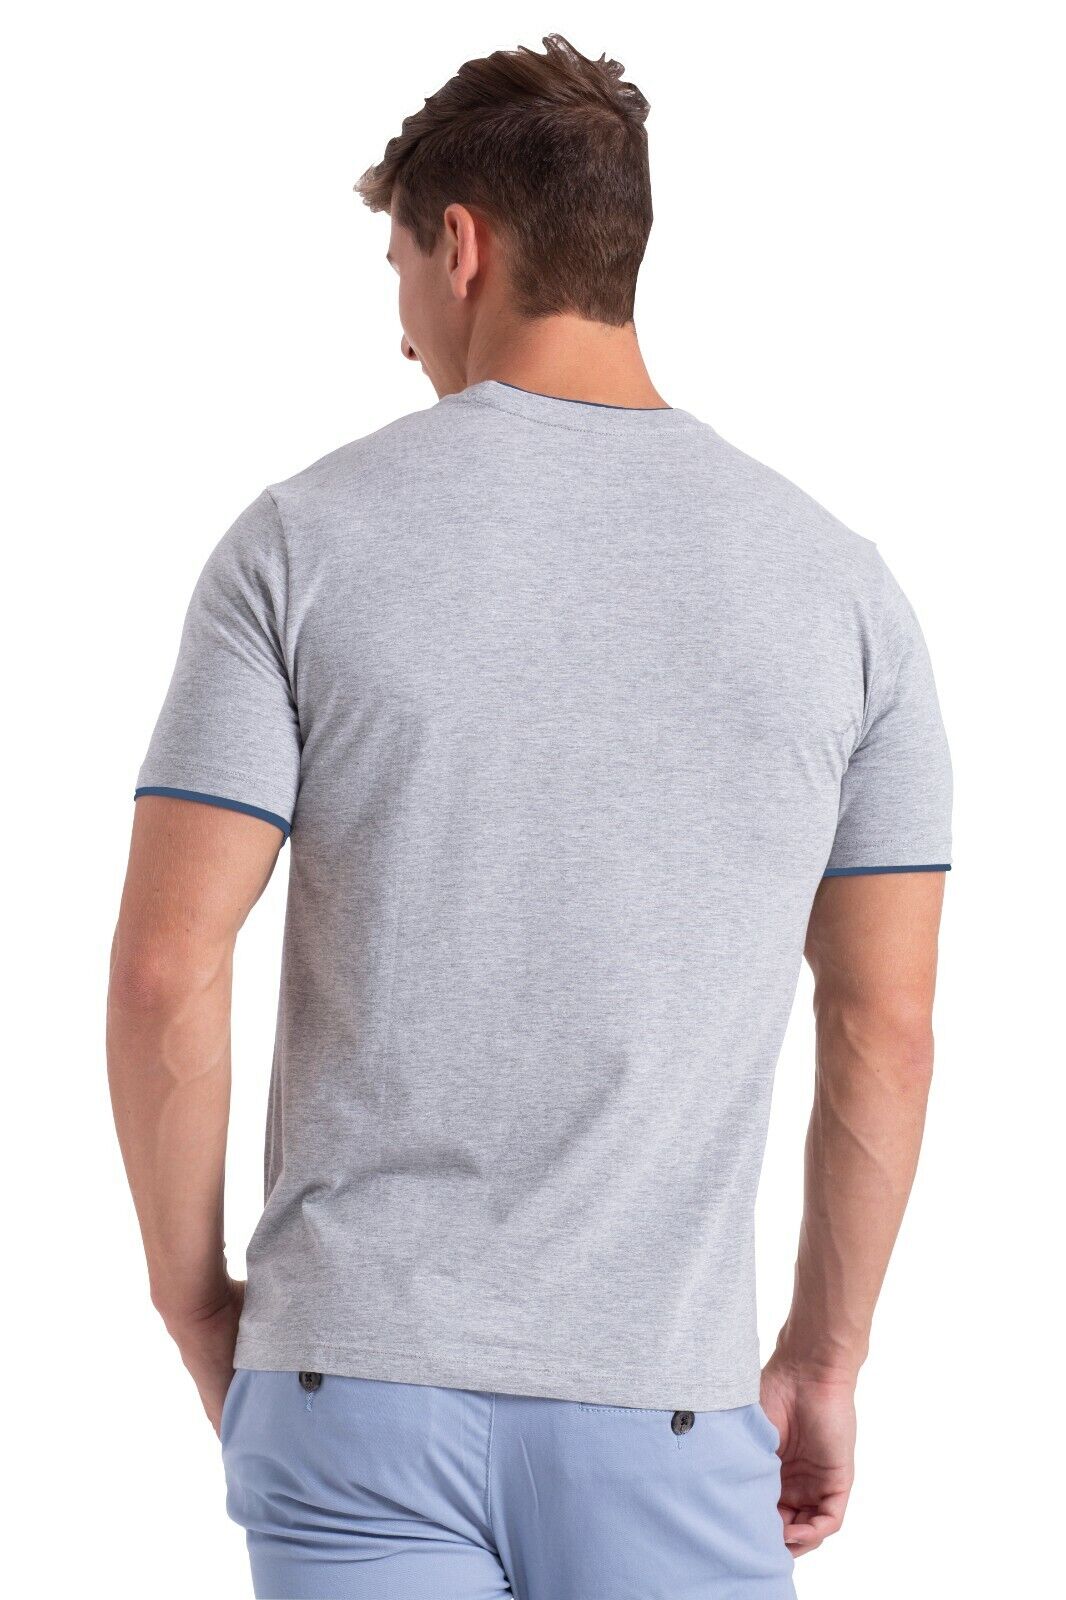 Men's Short Sleeve Crew Neck Cotton T-Shirts Workwear Undershirts Gym T ...